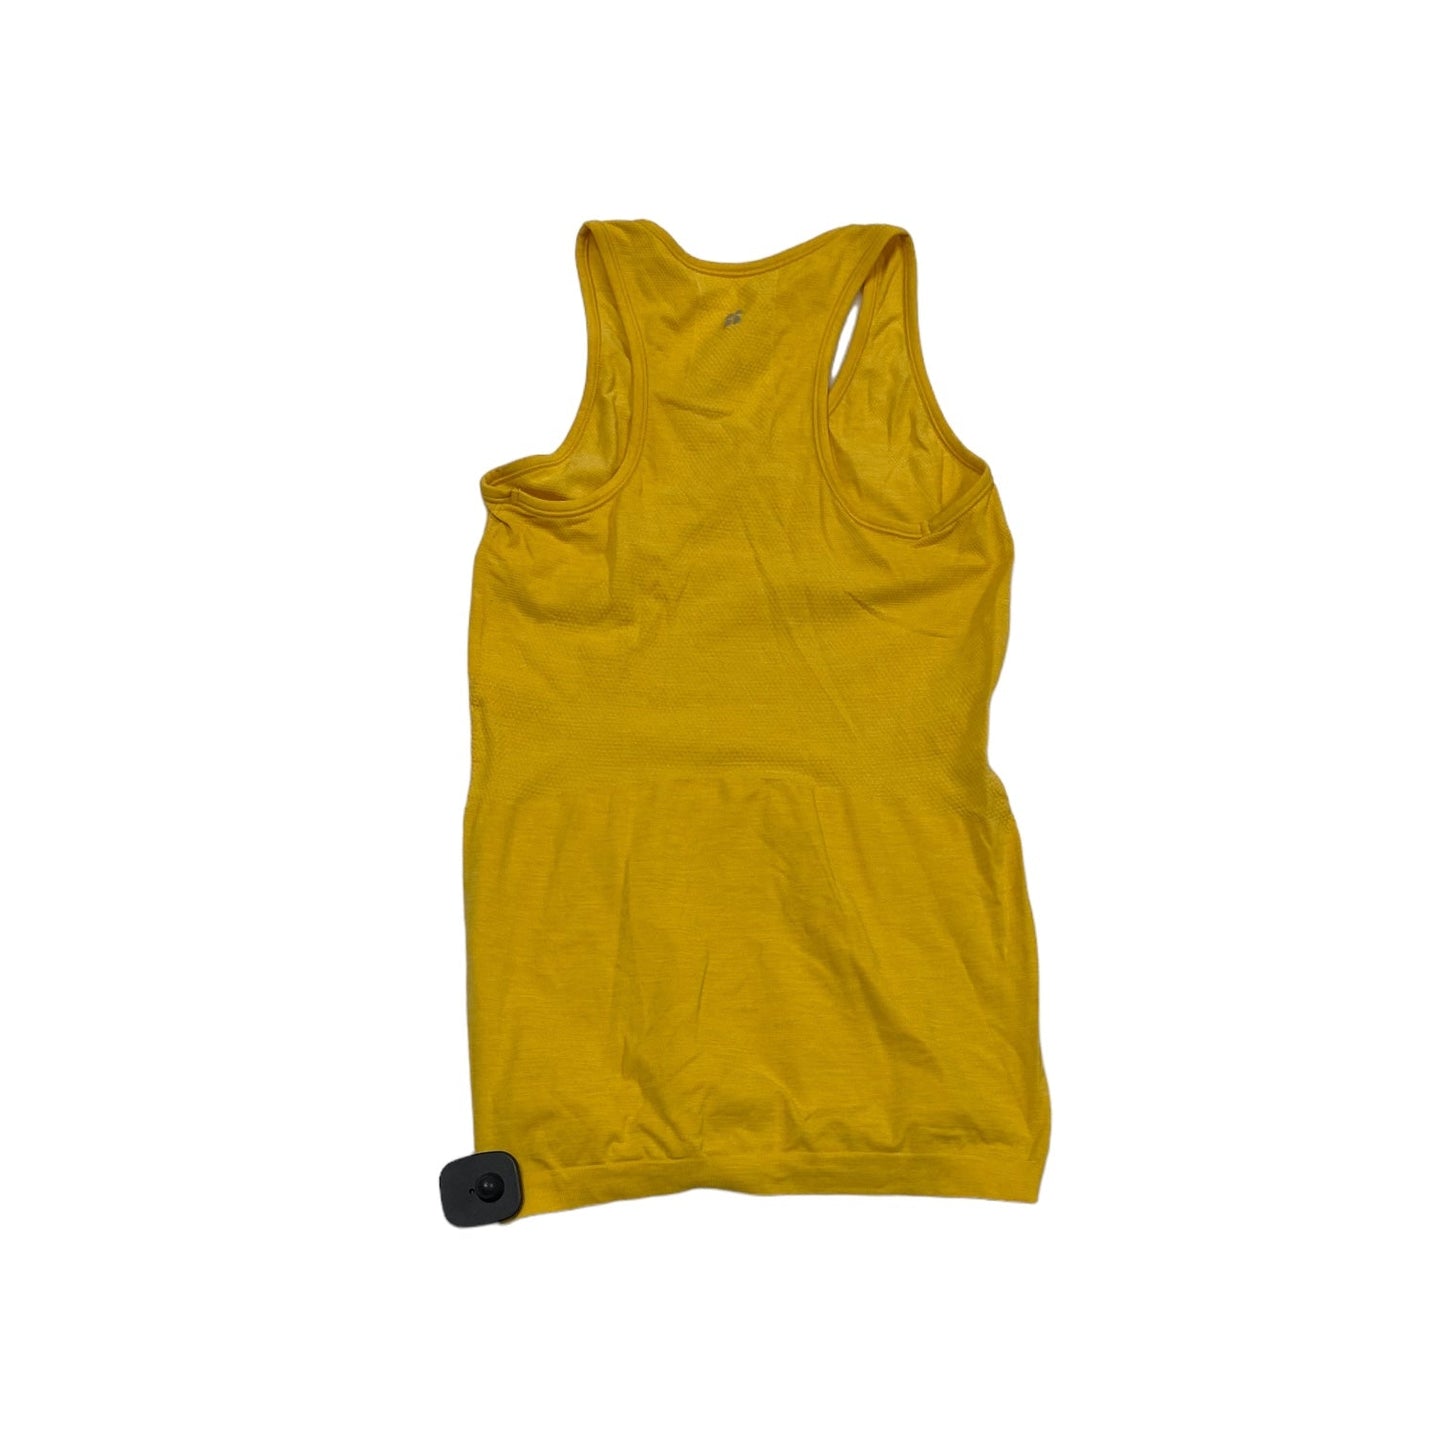 Yellow Athletic Tank Top Sweaty Betty, Size S